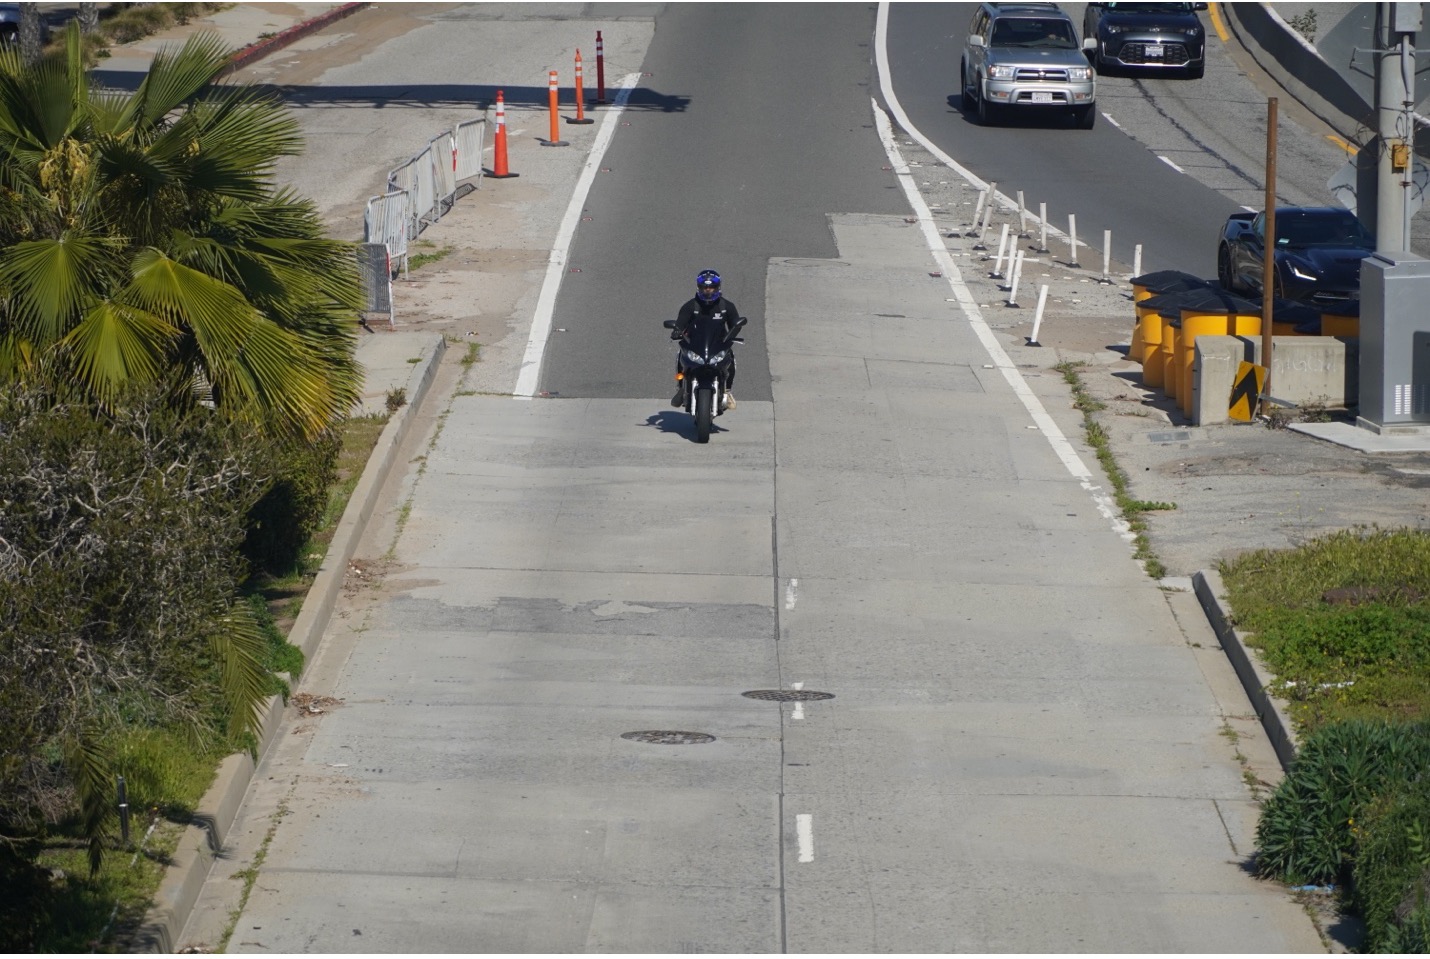 Motorcycle on road exit ramp